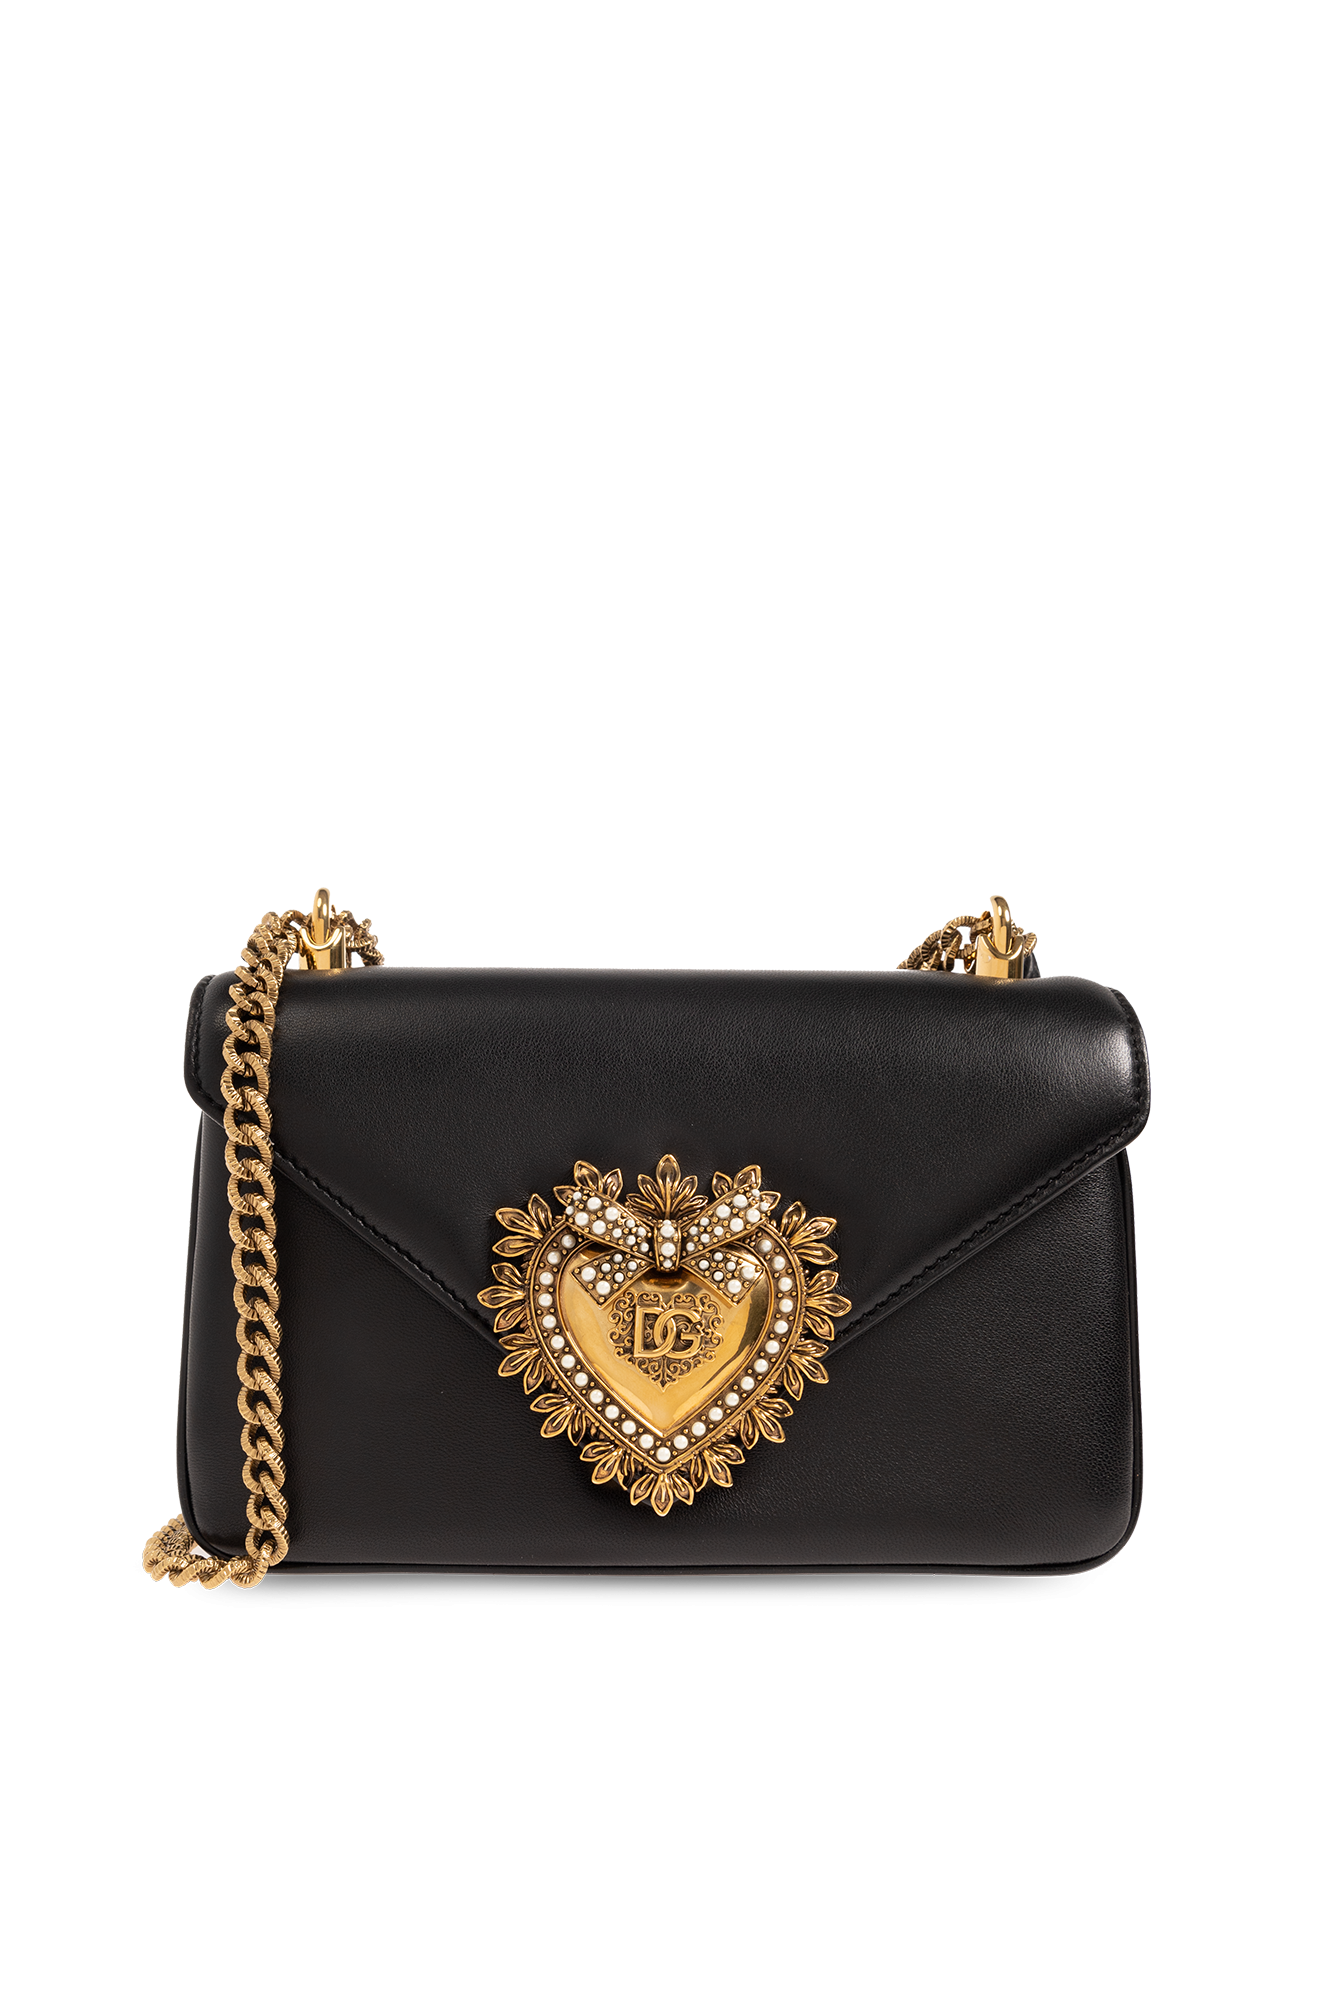 Dolce & Gabbana Devotion Heart Embellished Crossbody Bag in Metallic